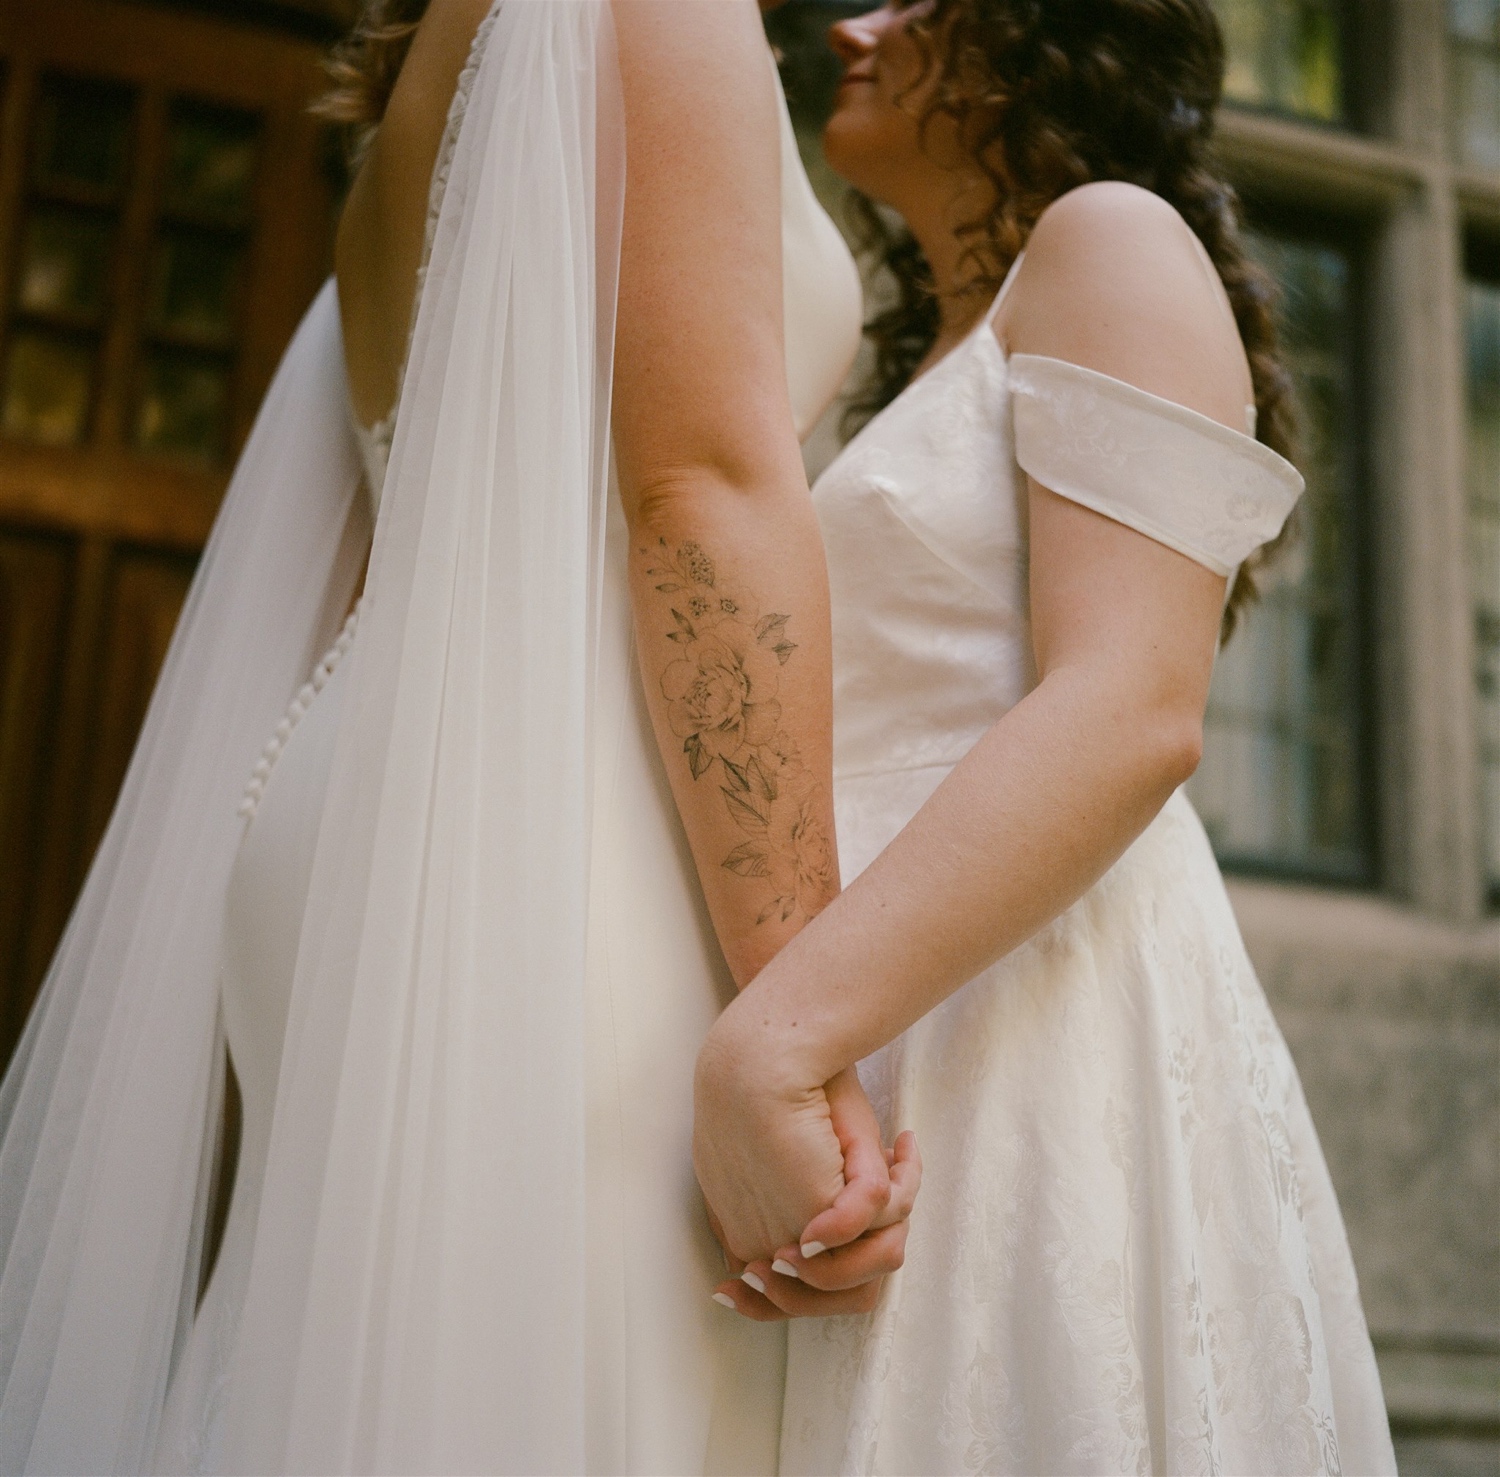 Los Angeles LGBTQ+ wedding photographer